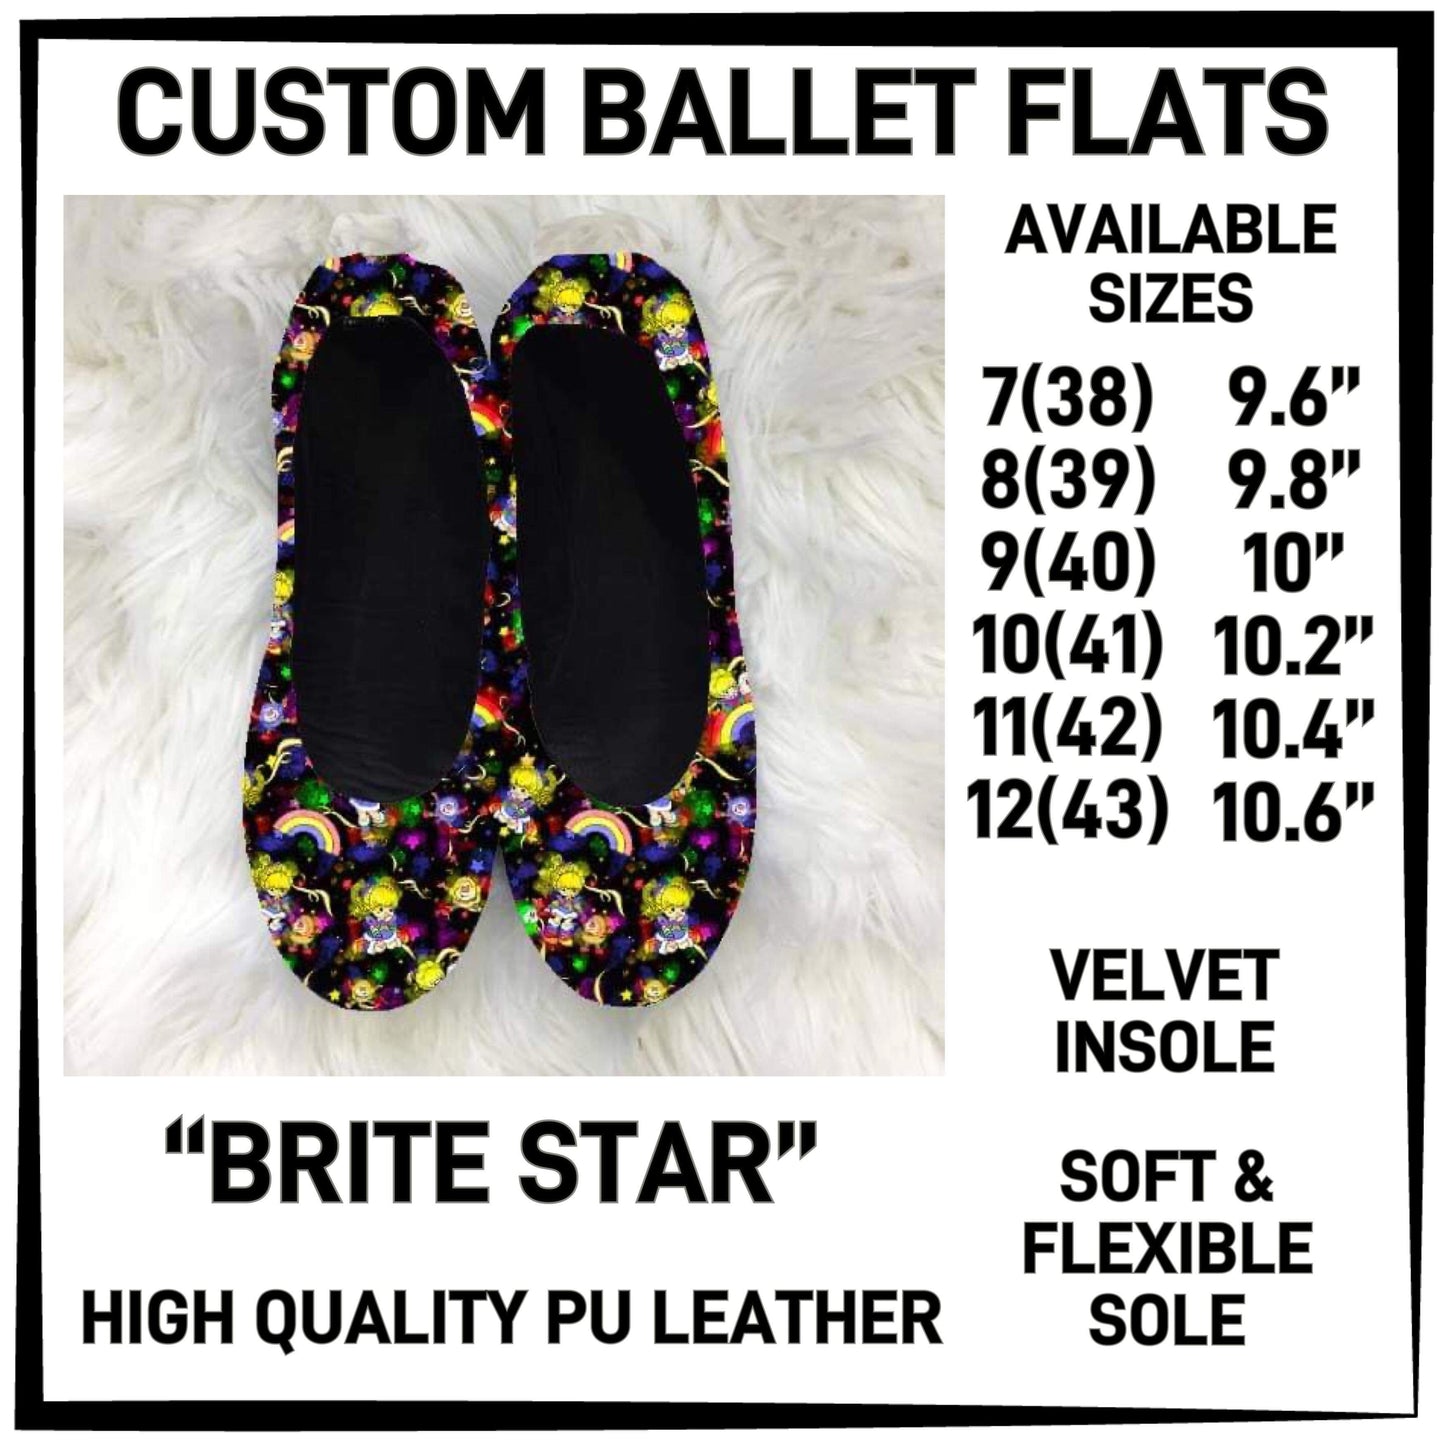 RTS - Brite Star Ballet Flats